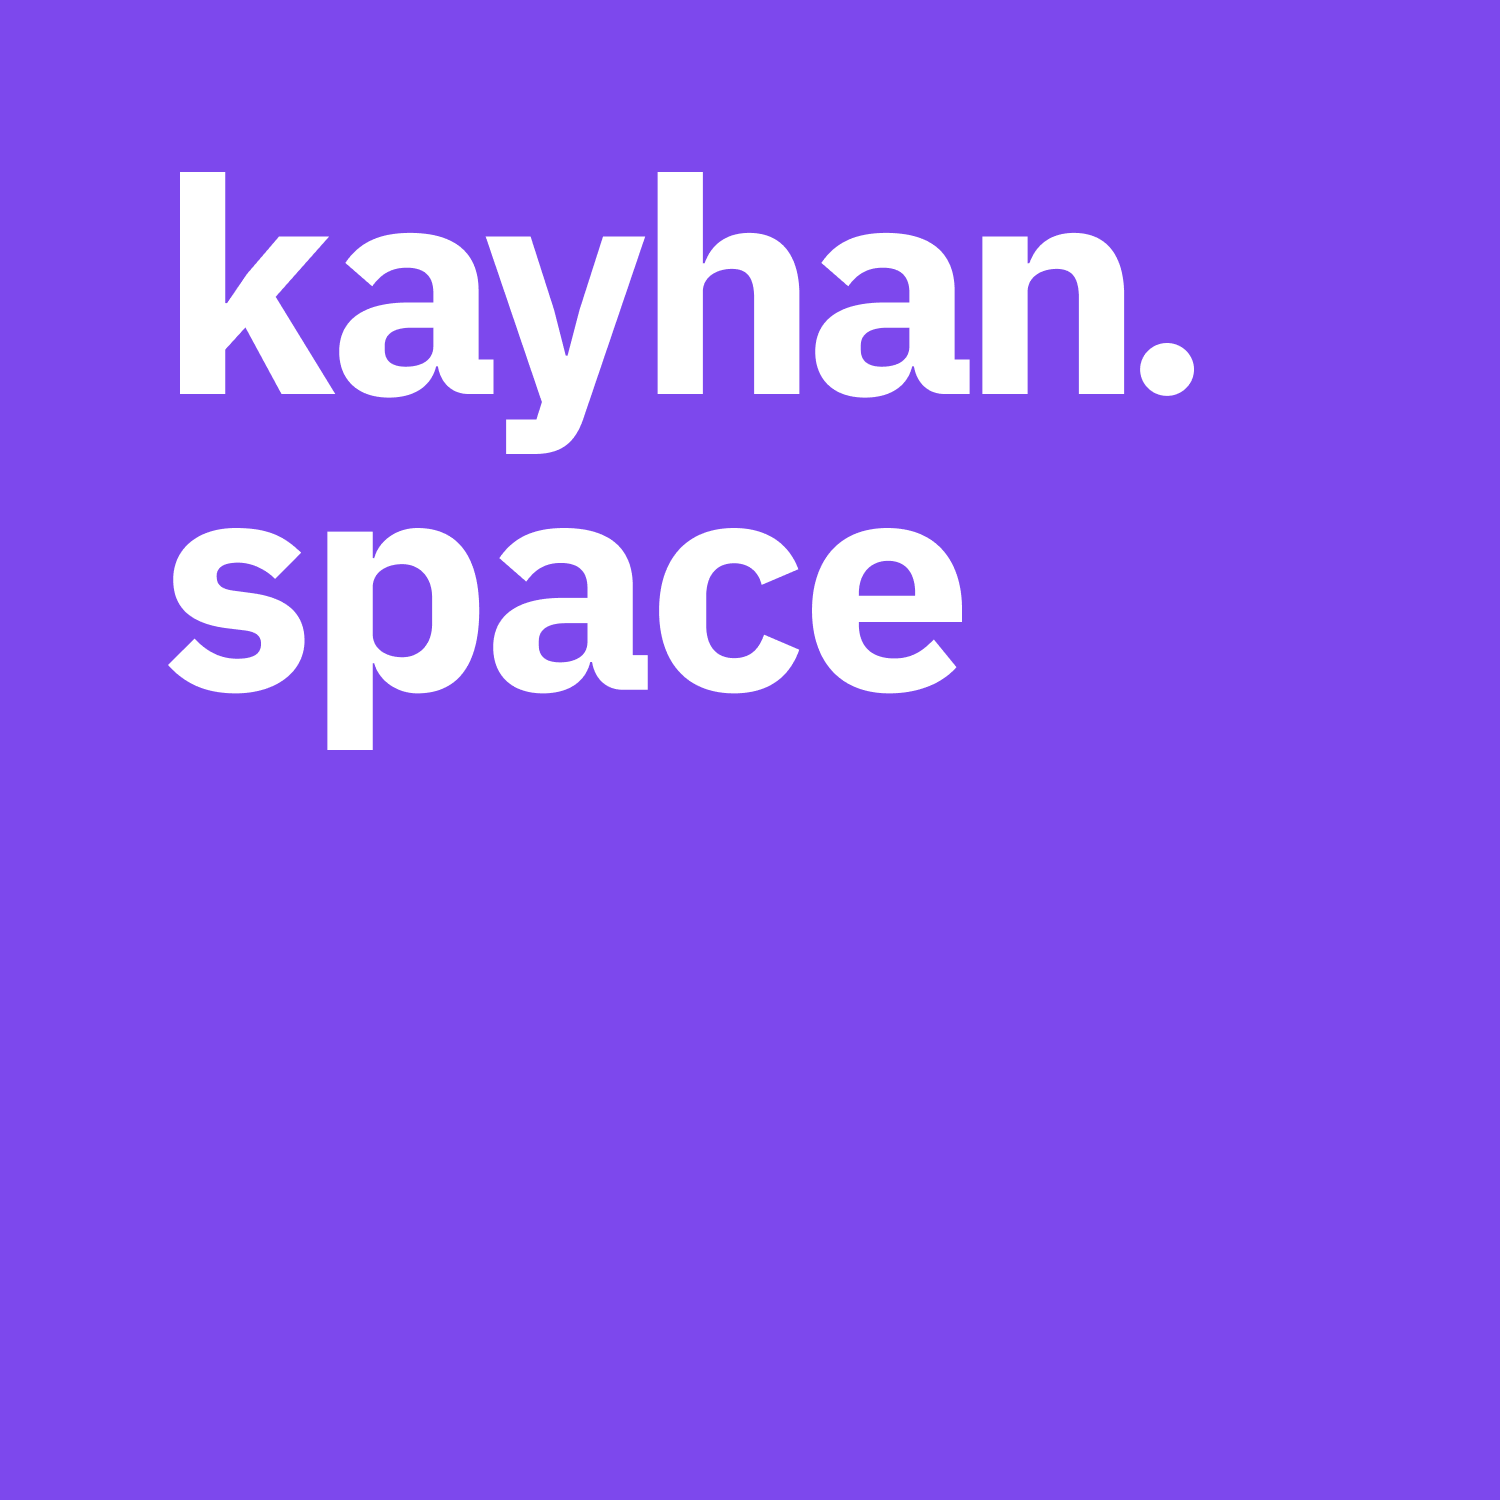 Kayhan. Space